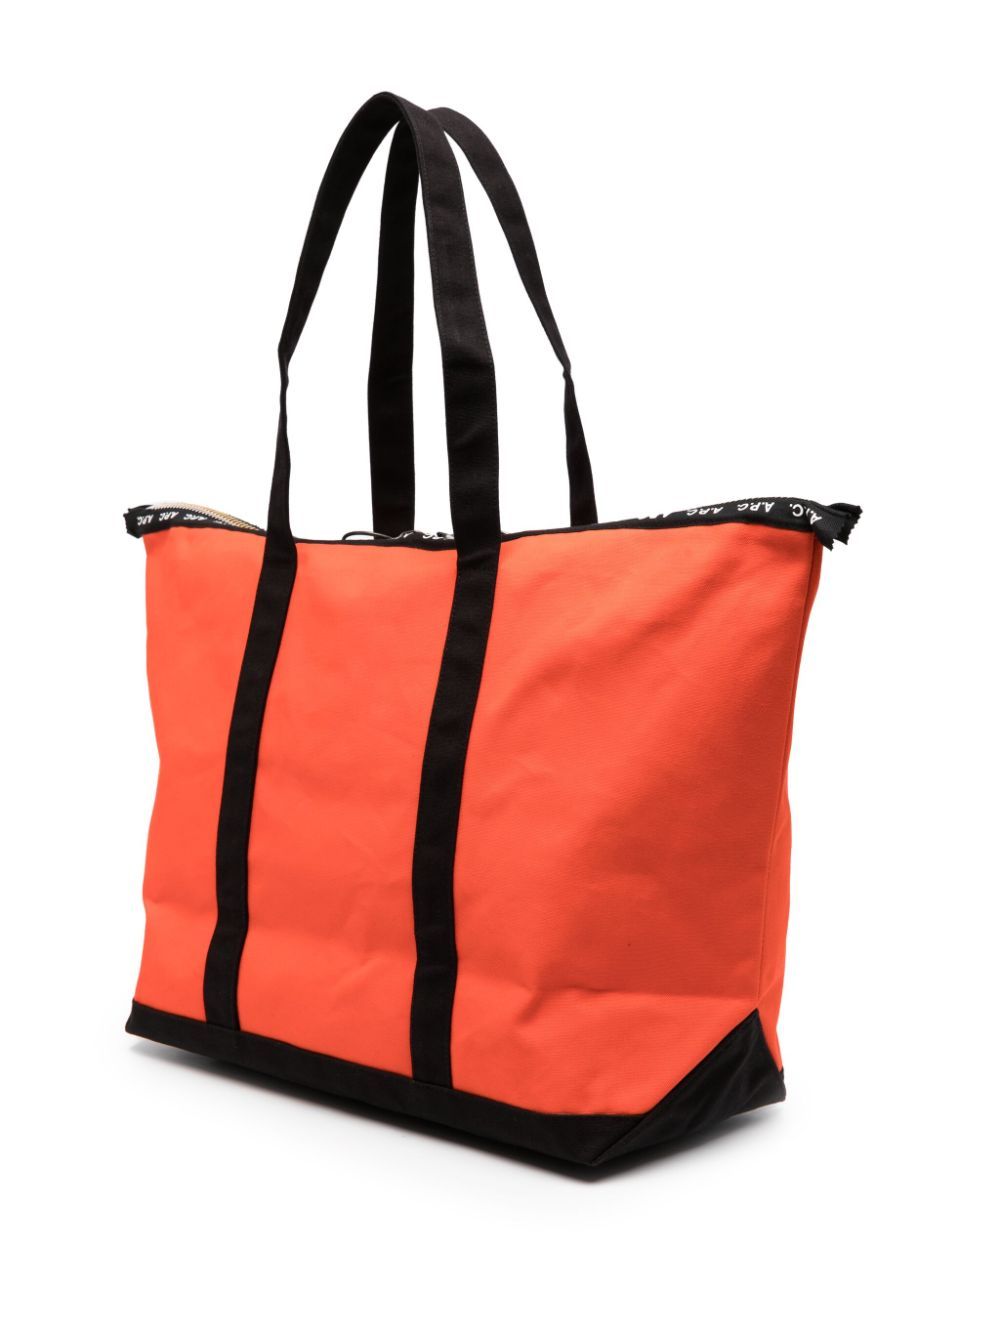 JW ANDERSON X APC Men's Orange Cotton Zipped Tote Handbag - FW23 Collection